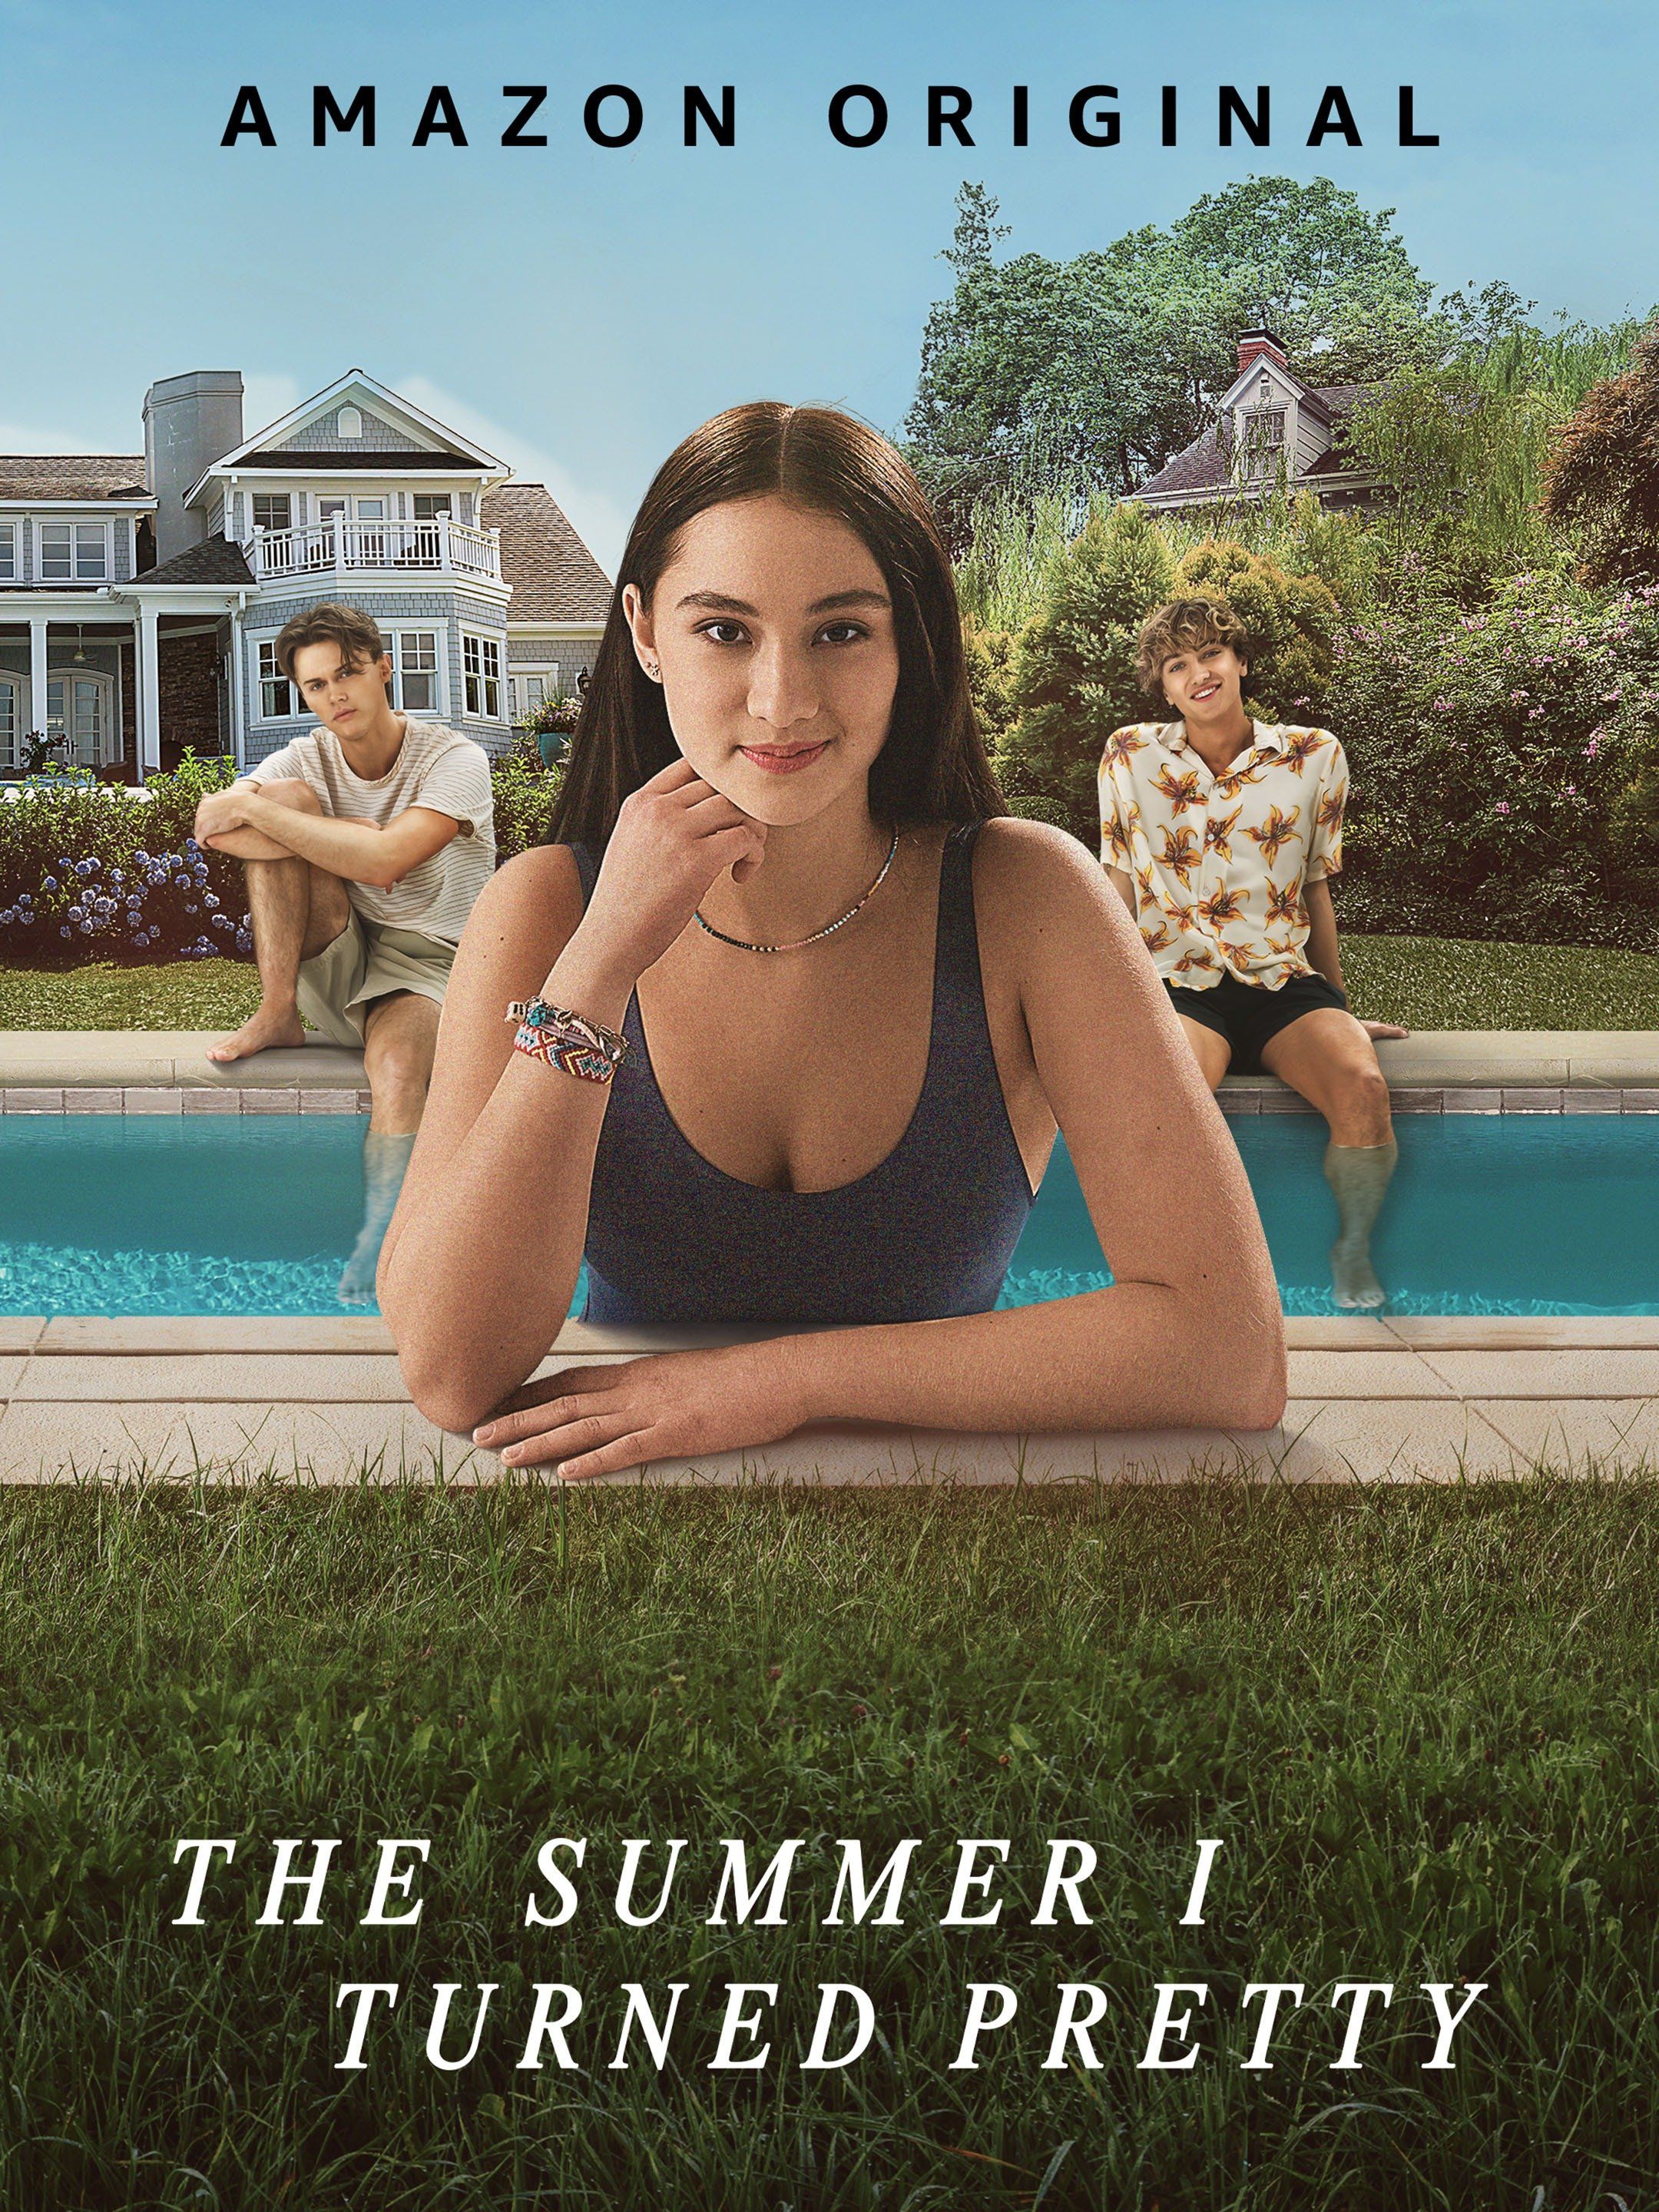 The Summer I Turned Pretty Season 3: Renewal, Cast, Story